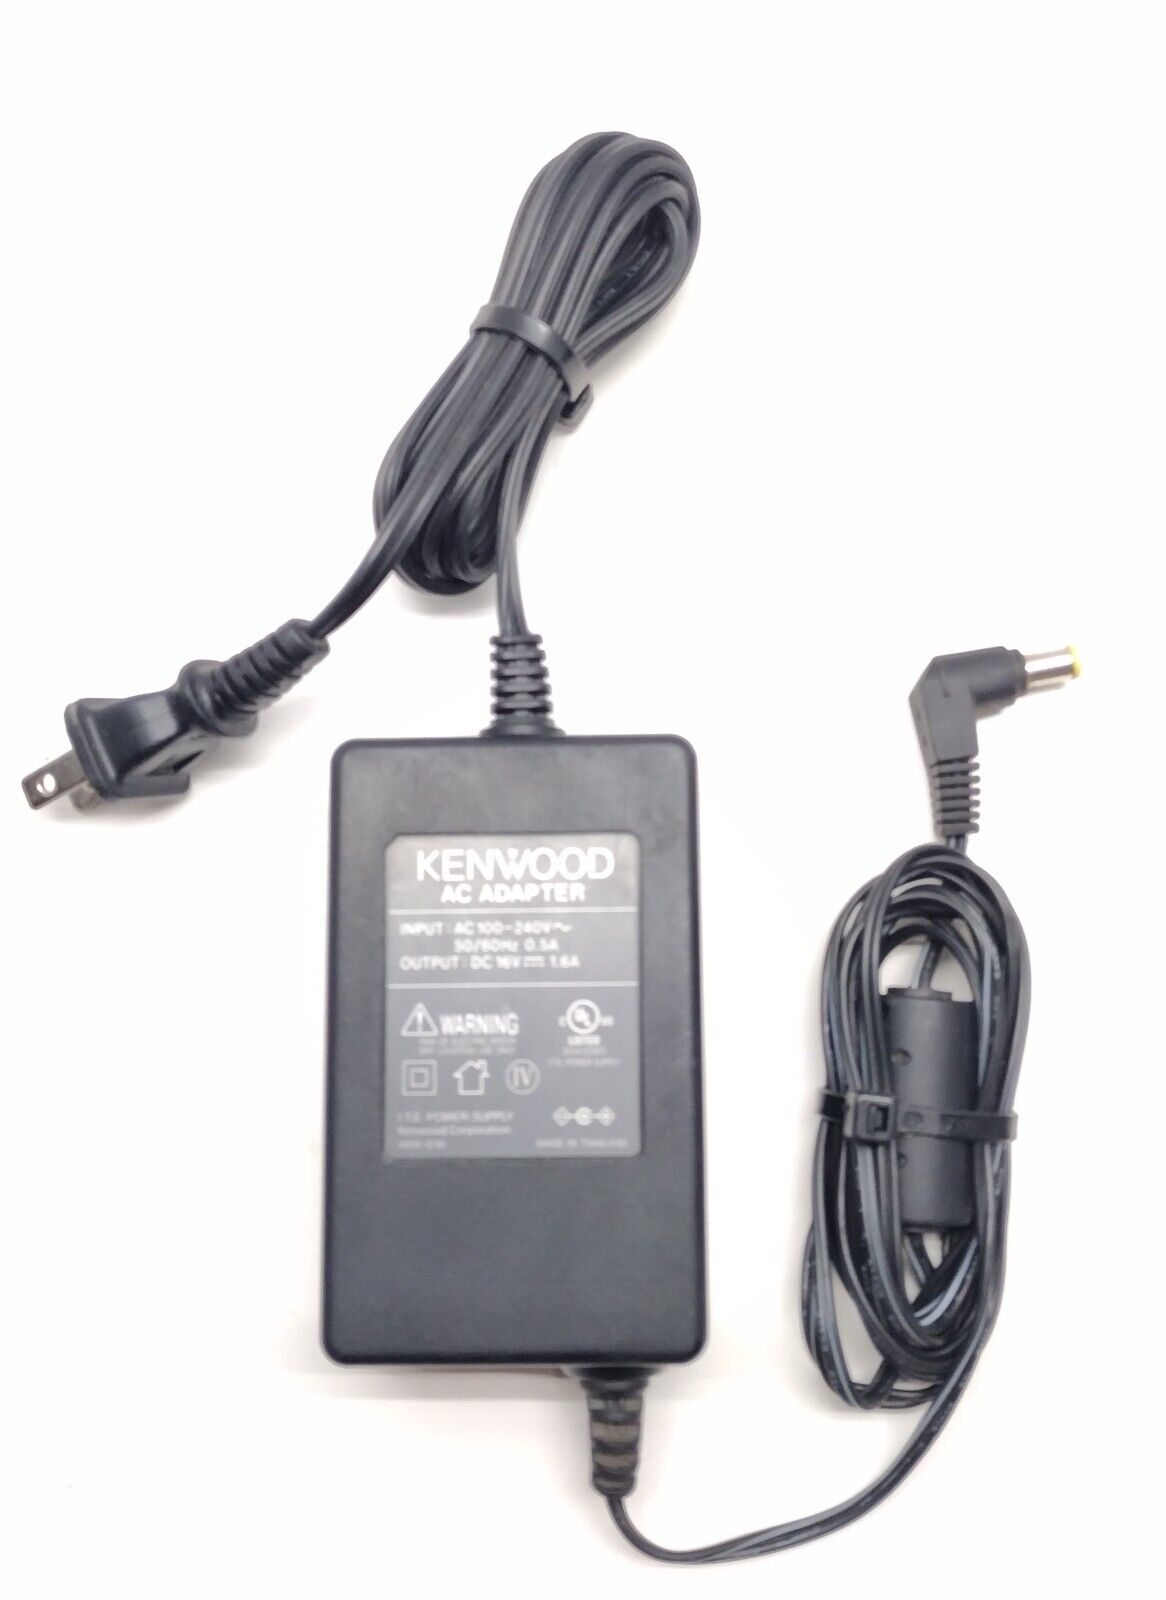 Kenwood TK-5210-K3 VHF 136-174 MHz Digital P25 Two-Way Radio Transceiver Ver. 3